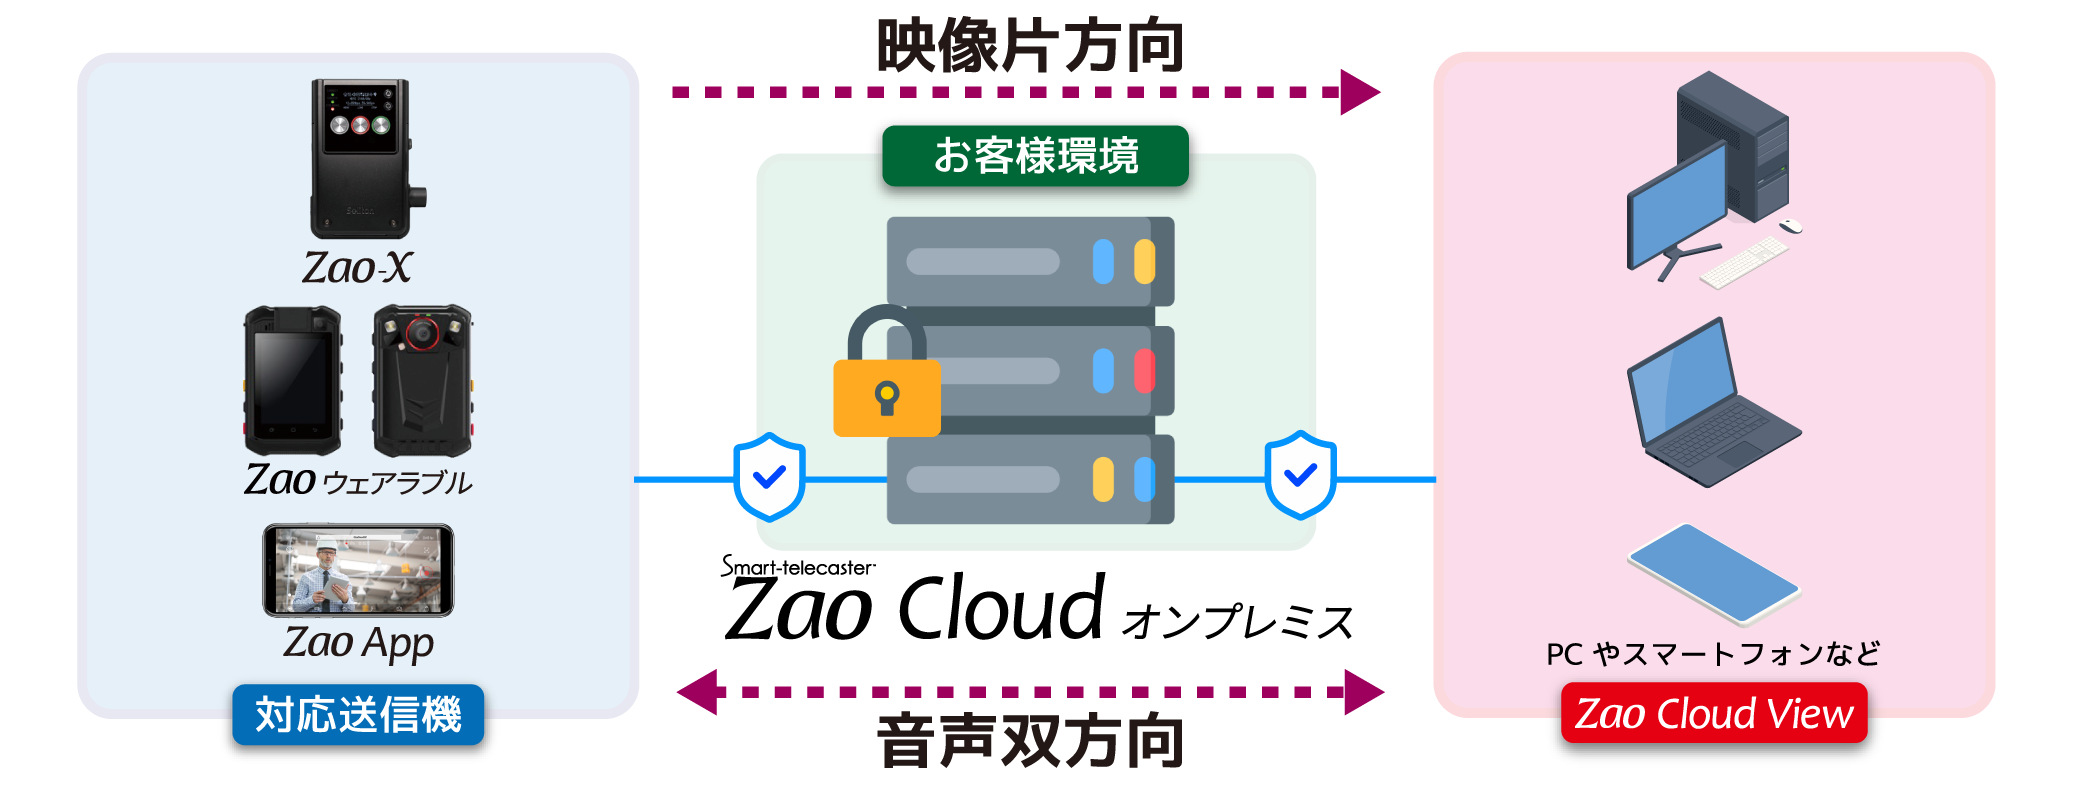 STC_ZCO_Diagram.png